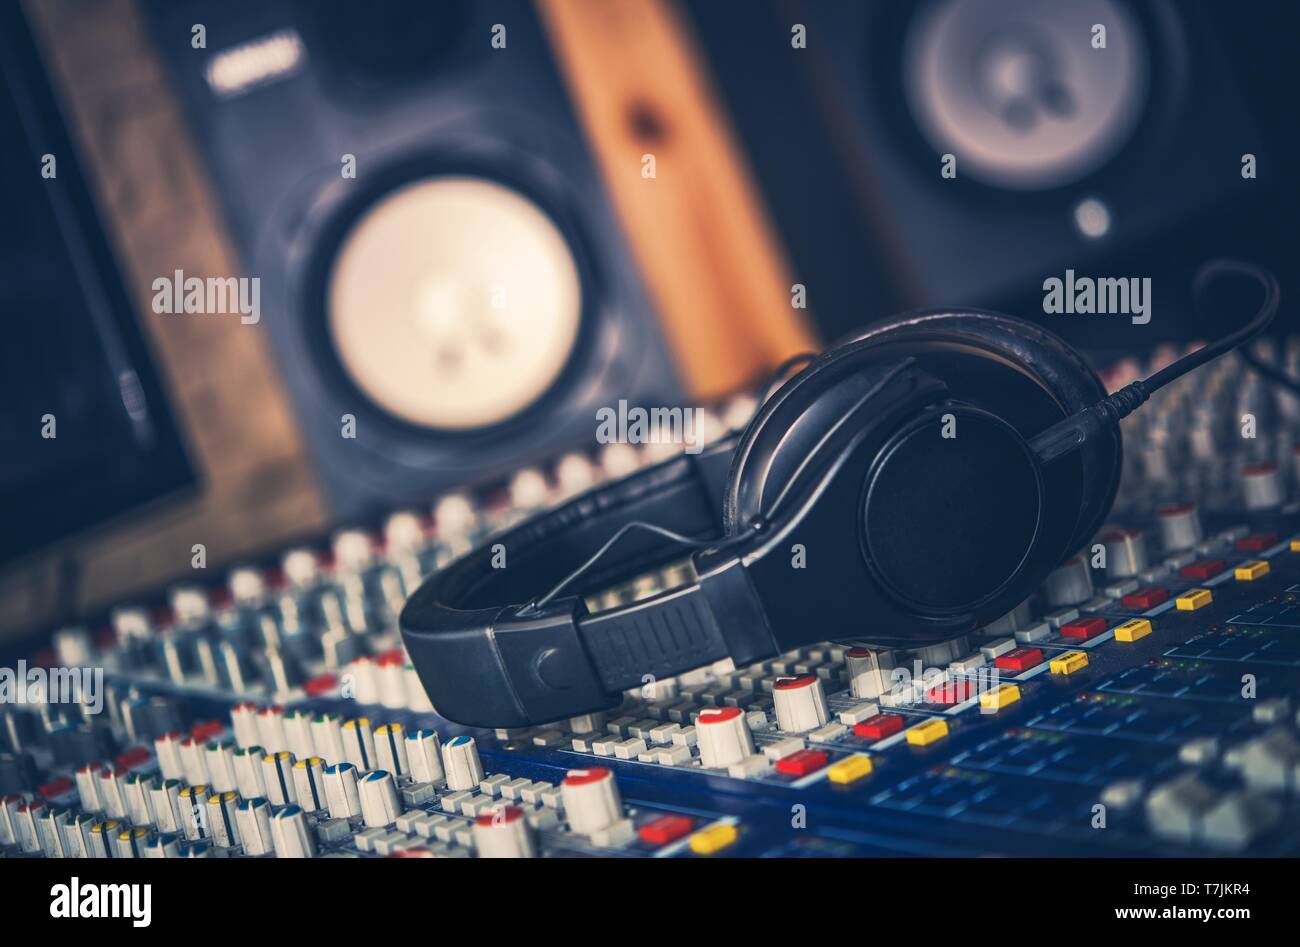 Sound Mastering Job. Audio Equipment in the Recording Studio. Professional Headphones and Audio Mixer. Modern Technology. Stock Photo